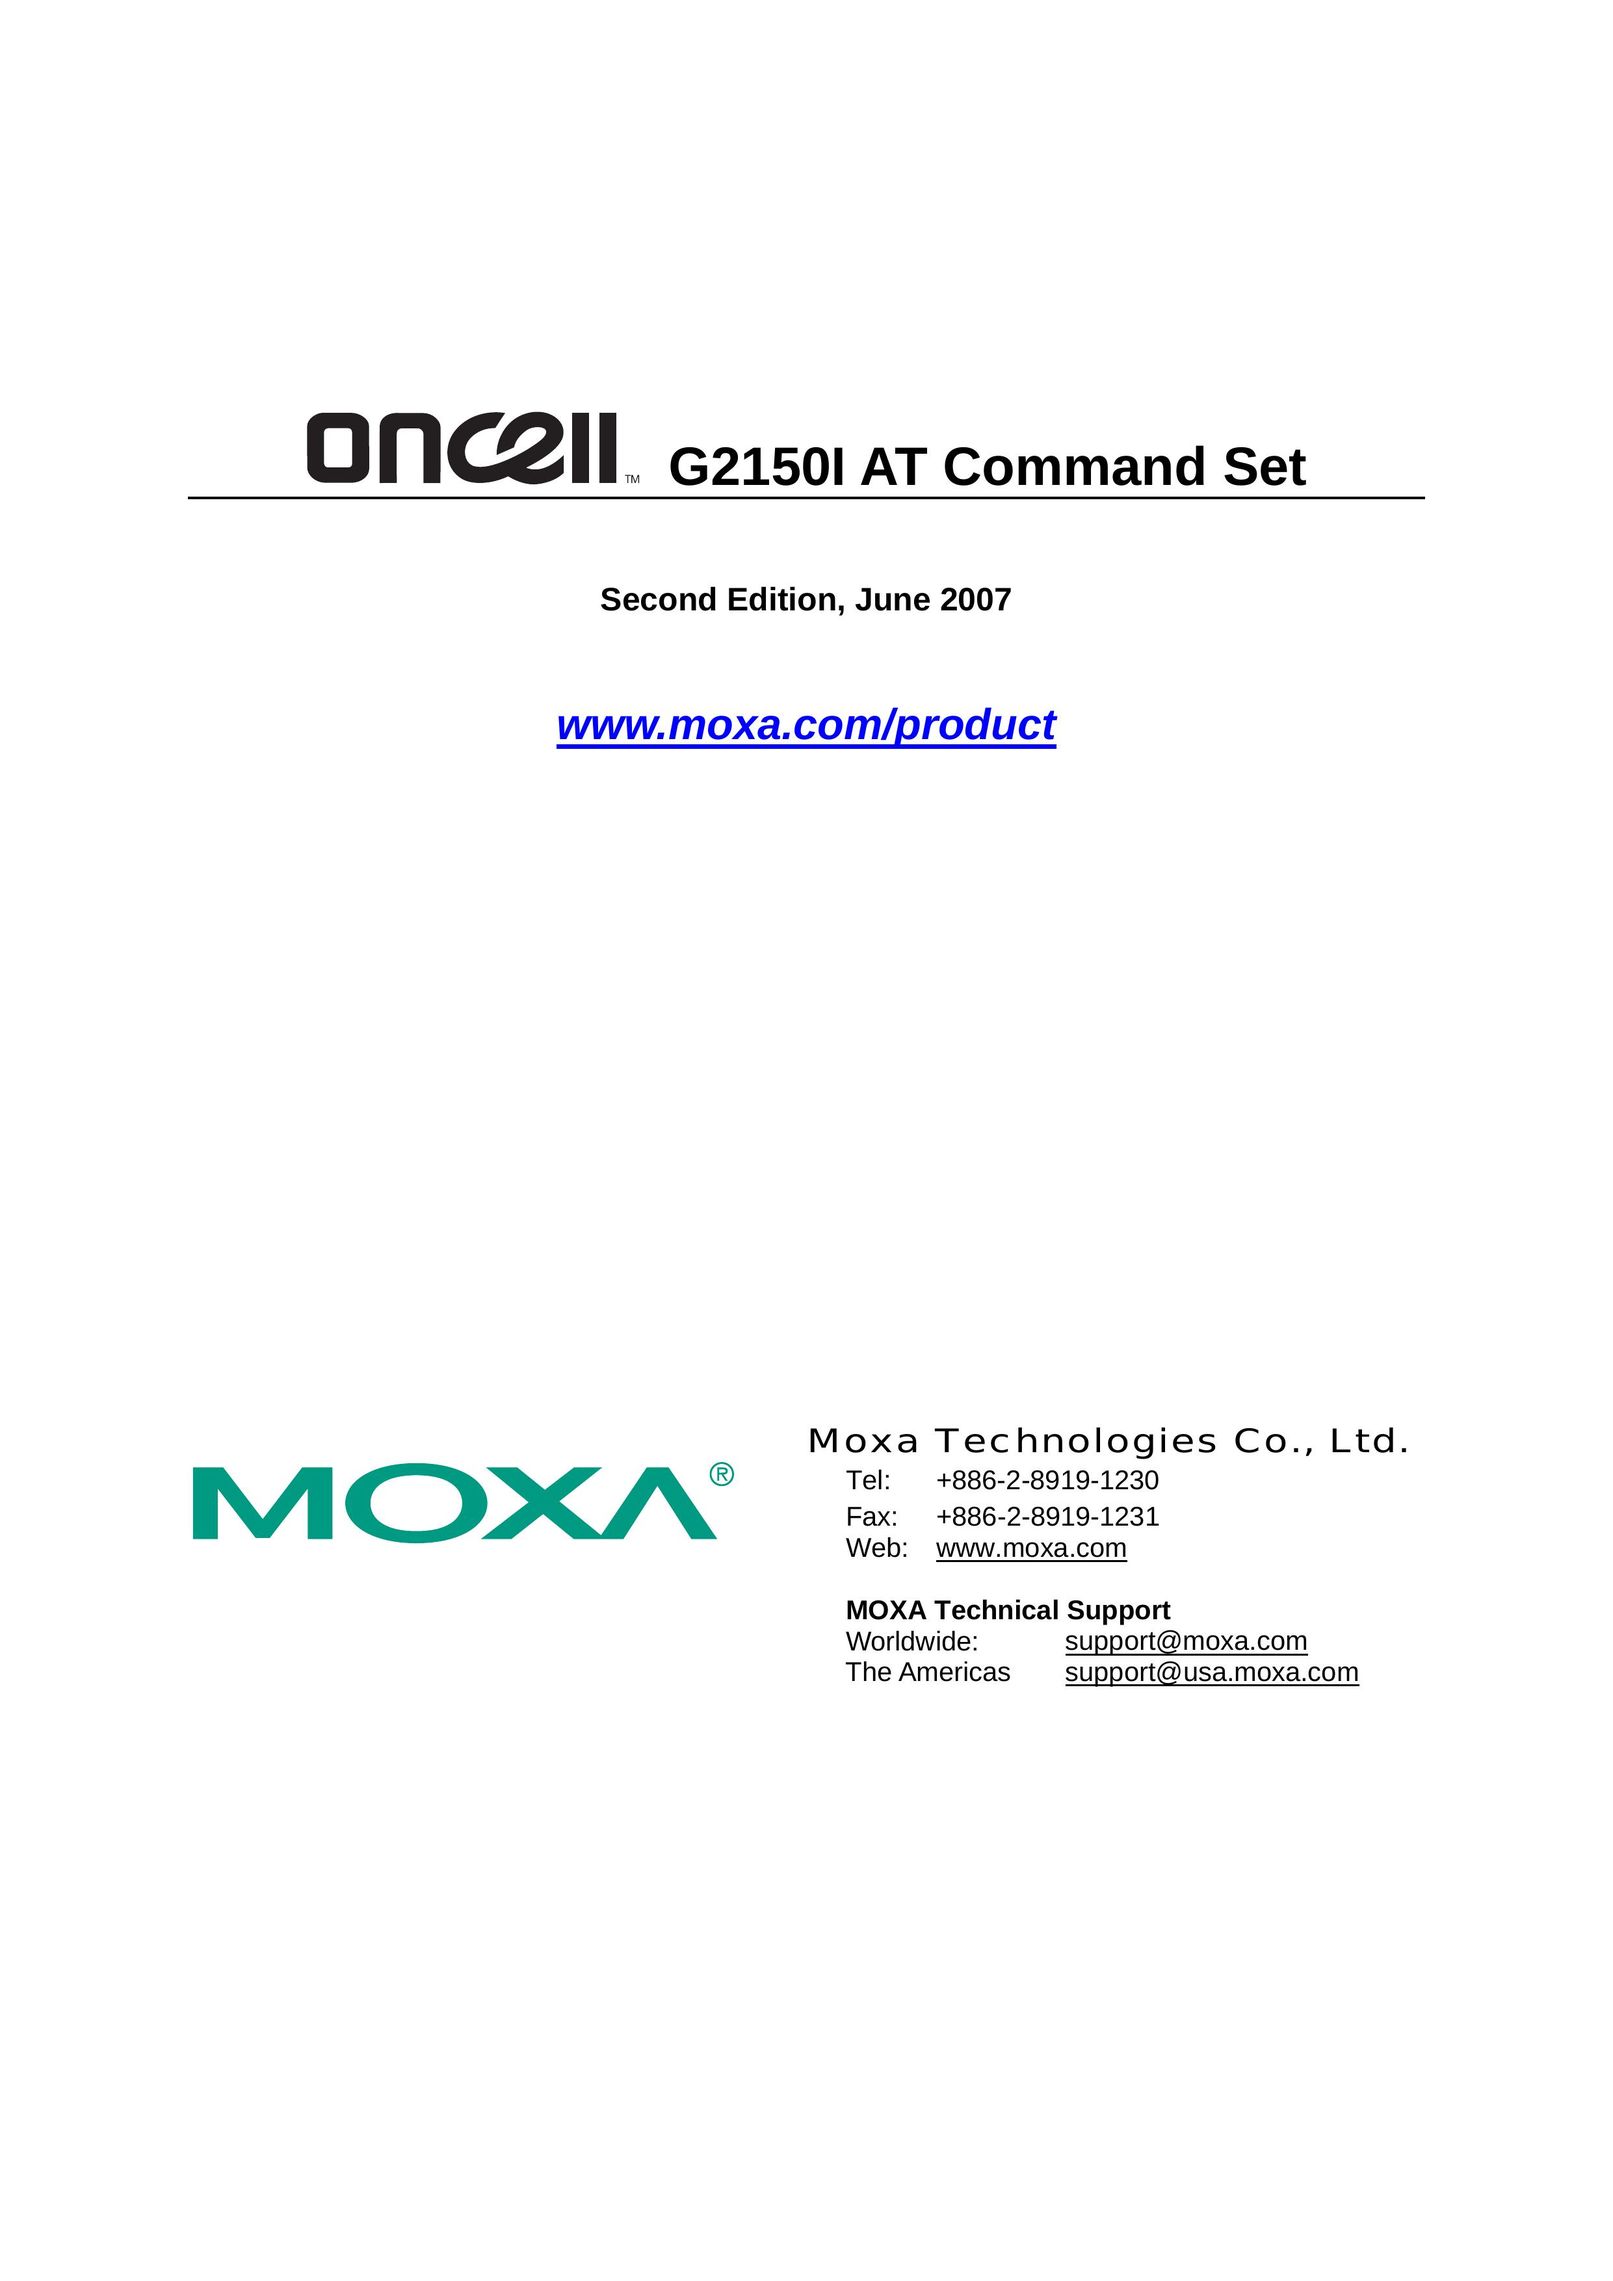 Moxa Technologies G2150I Carrying Case User Manual